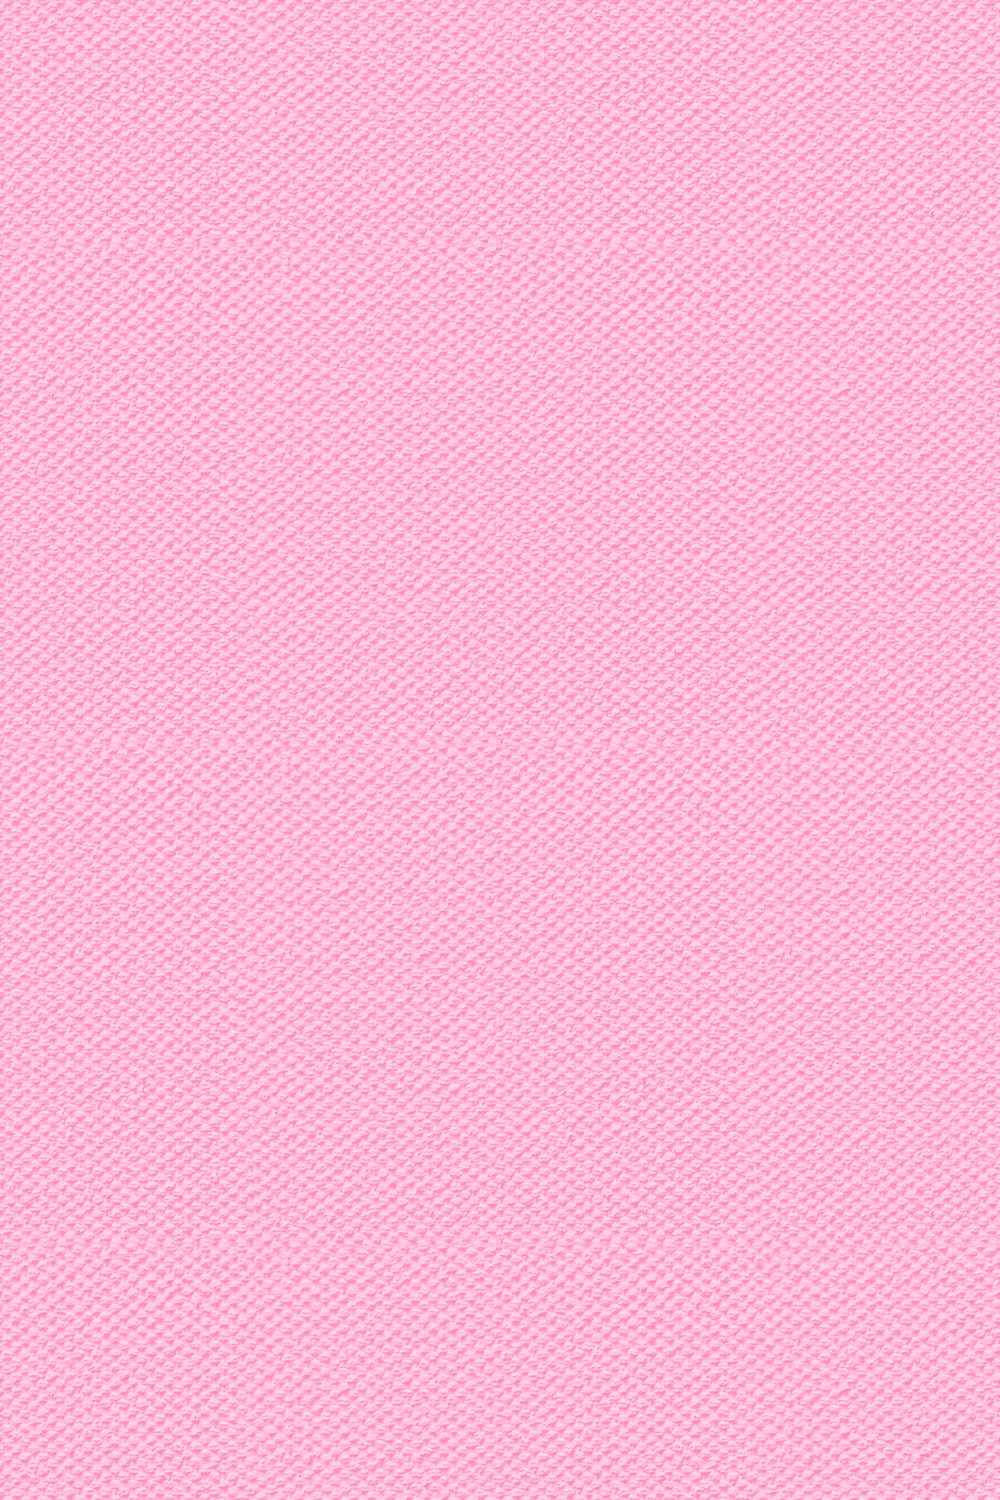 Textured Light Pink Color Wallpaper